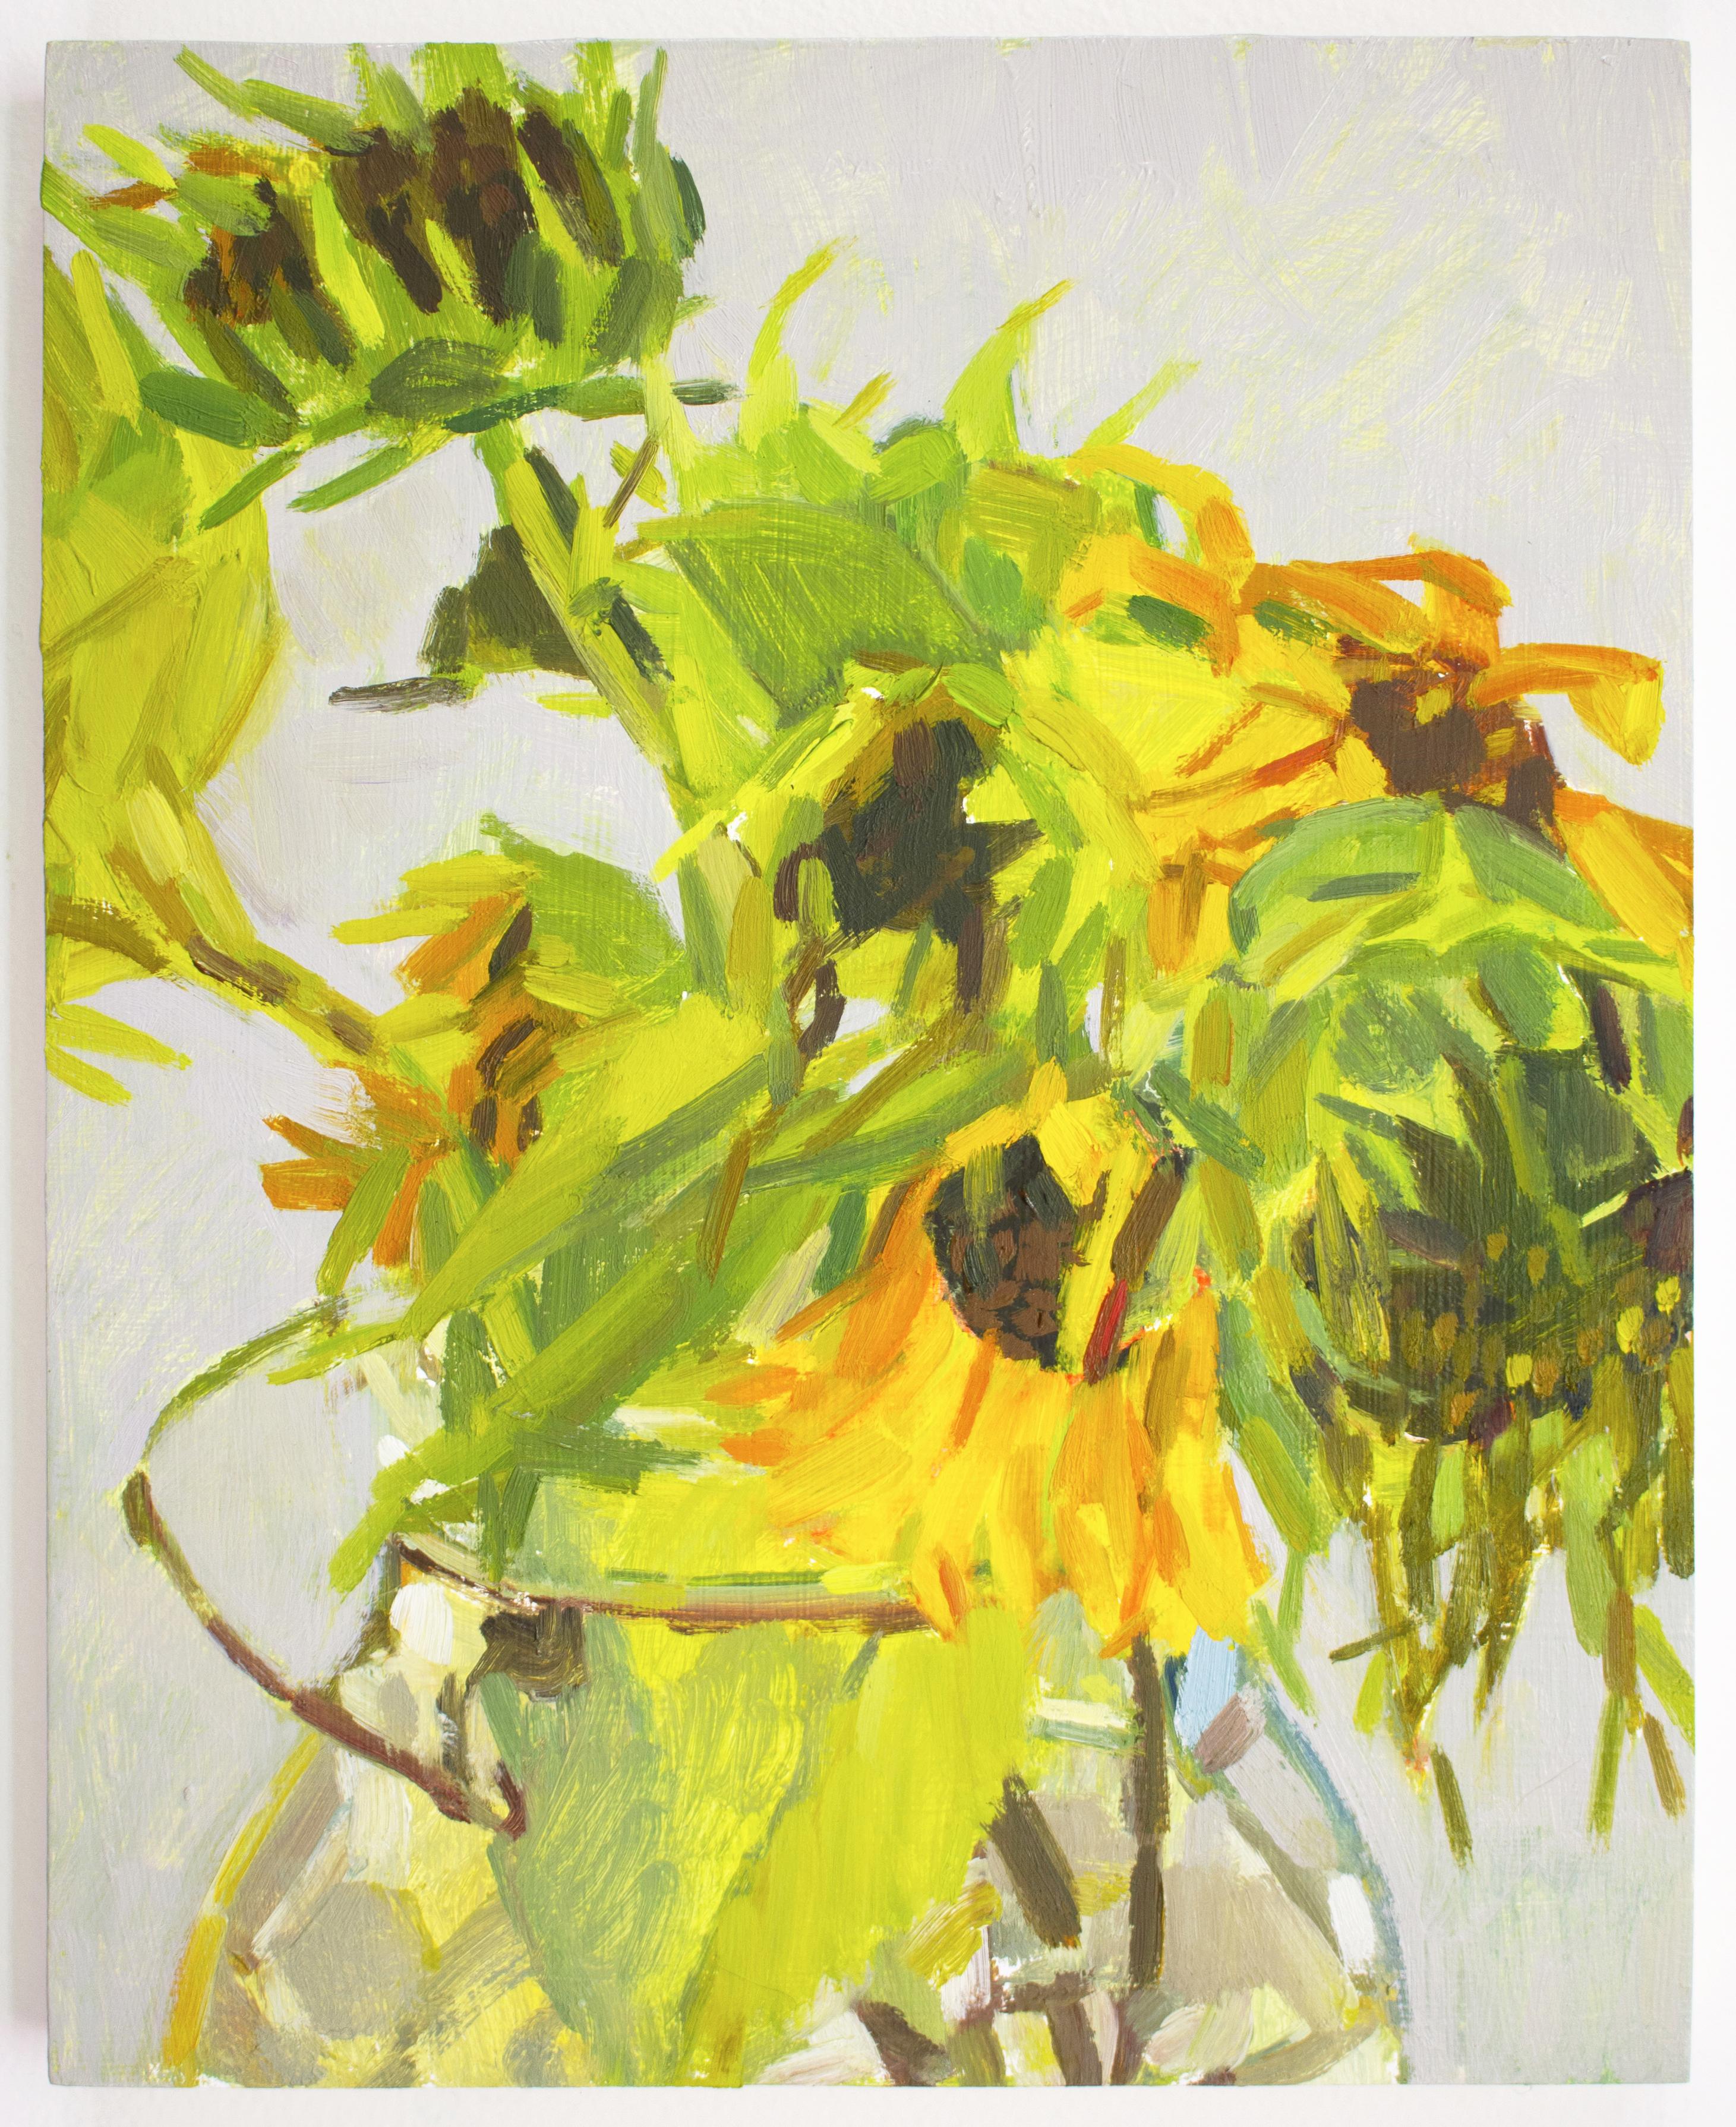 'Fading Sunflowers' - still life - floral, botanical, impressionism - Painting by Christina Renfer Vogel